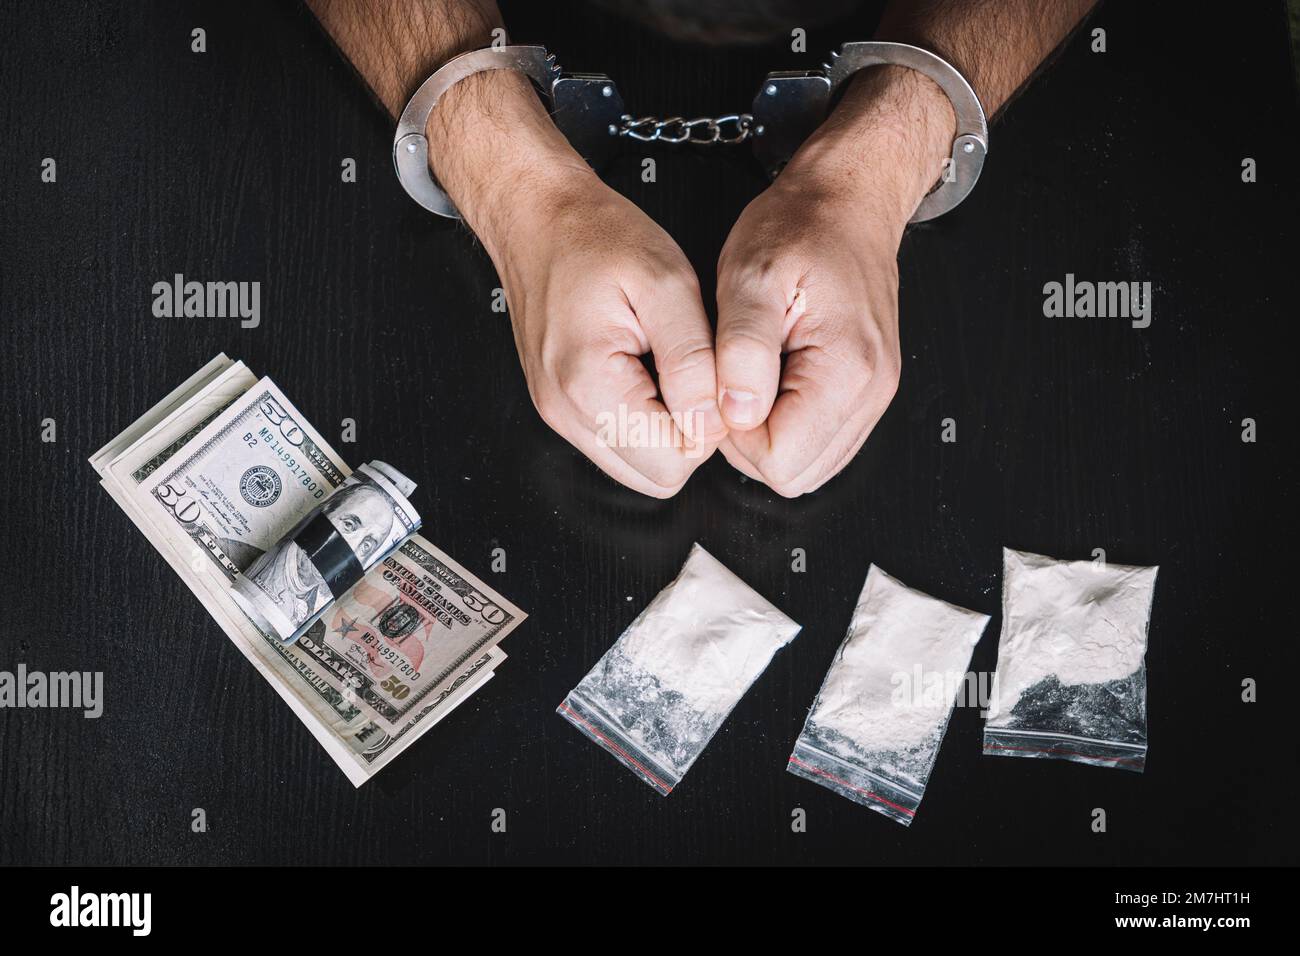 Drug Dealer Promises To Donate One Month's Profit